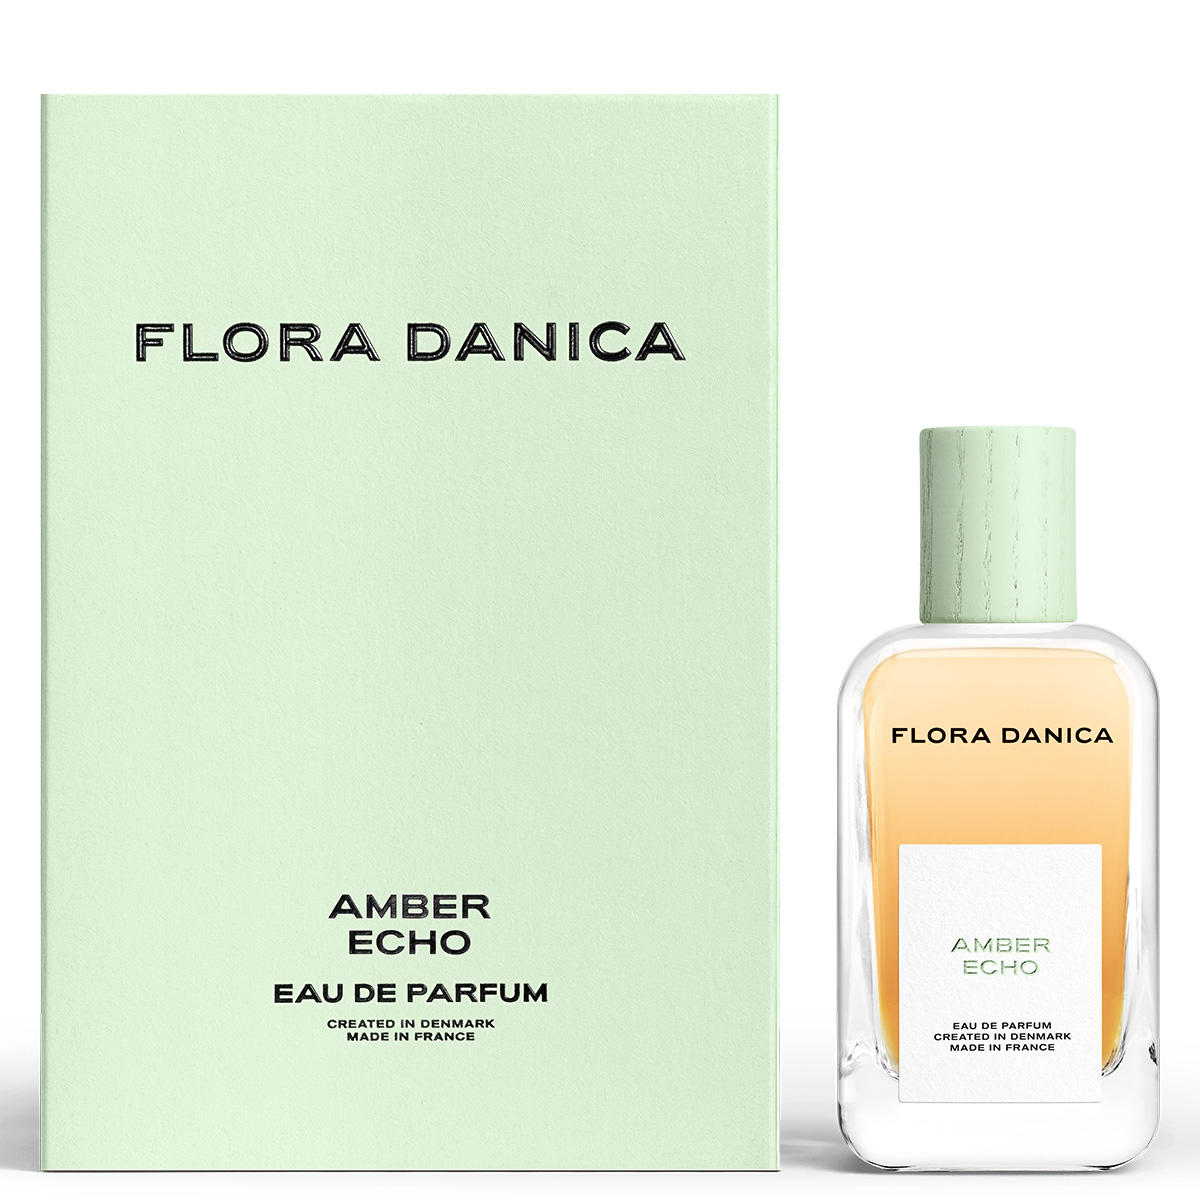 Flora Danica Amber Echo Eau de Parfum 100 ml - 2